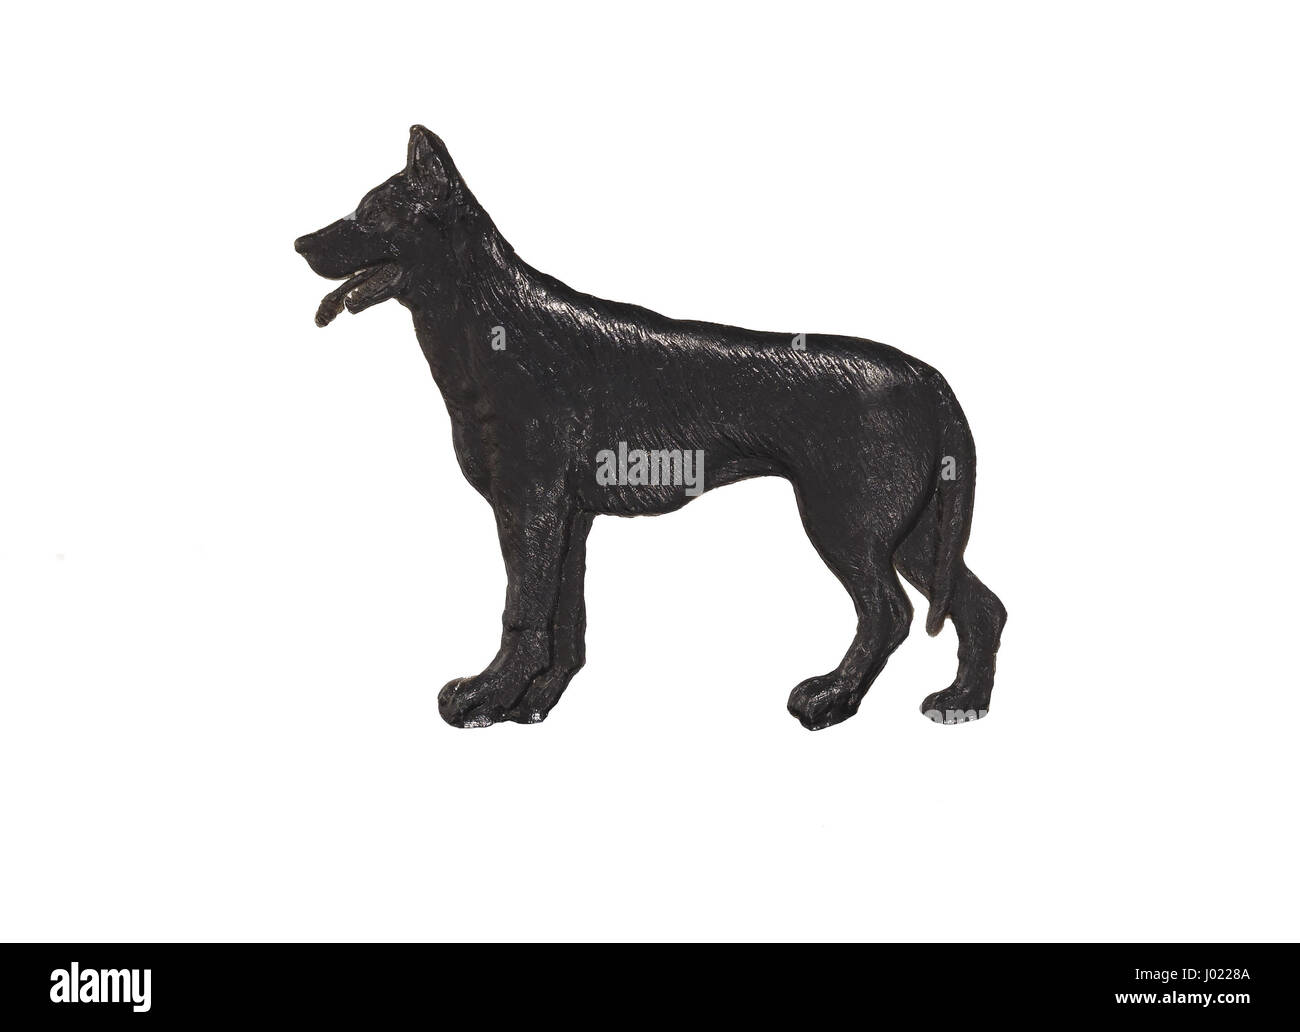 Black dog figure on white background, German Shepherd Stock Photo